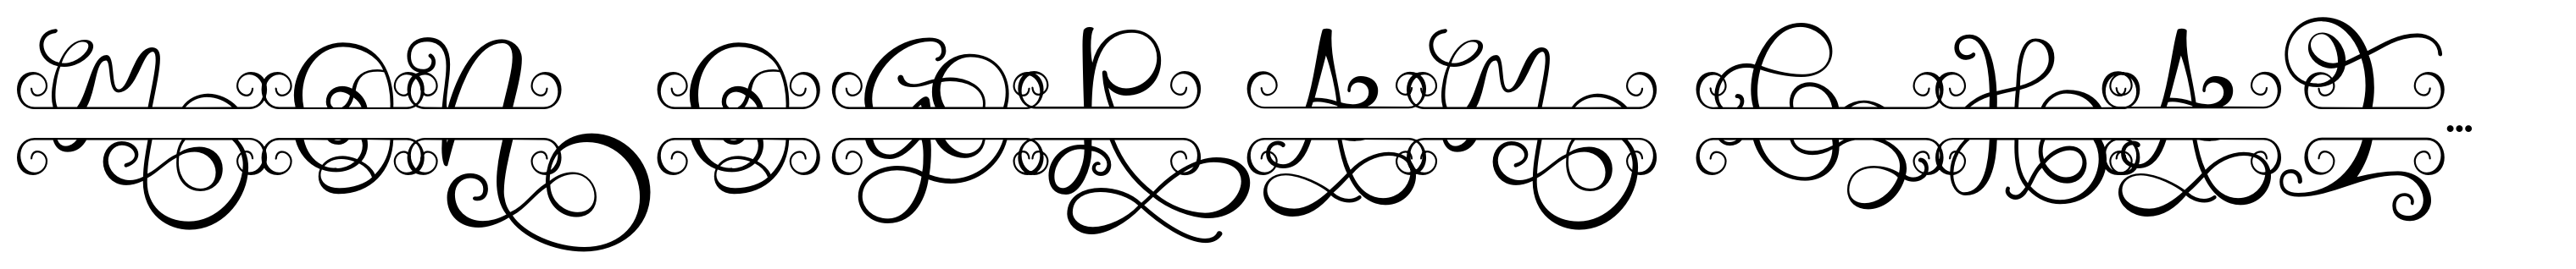 Monogram Challigraphy Brackets 13